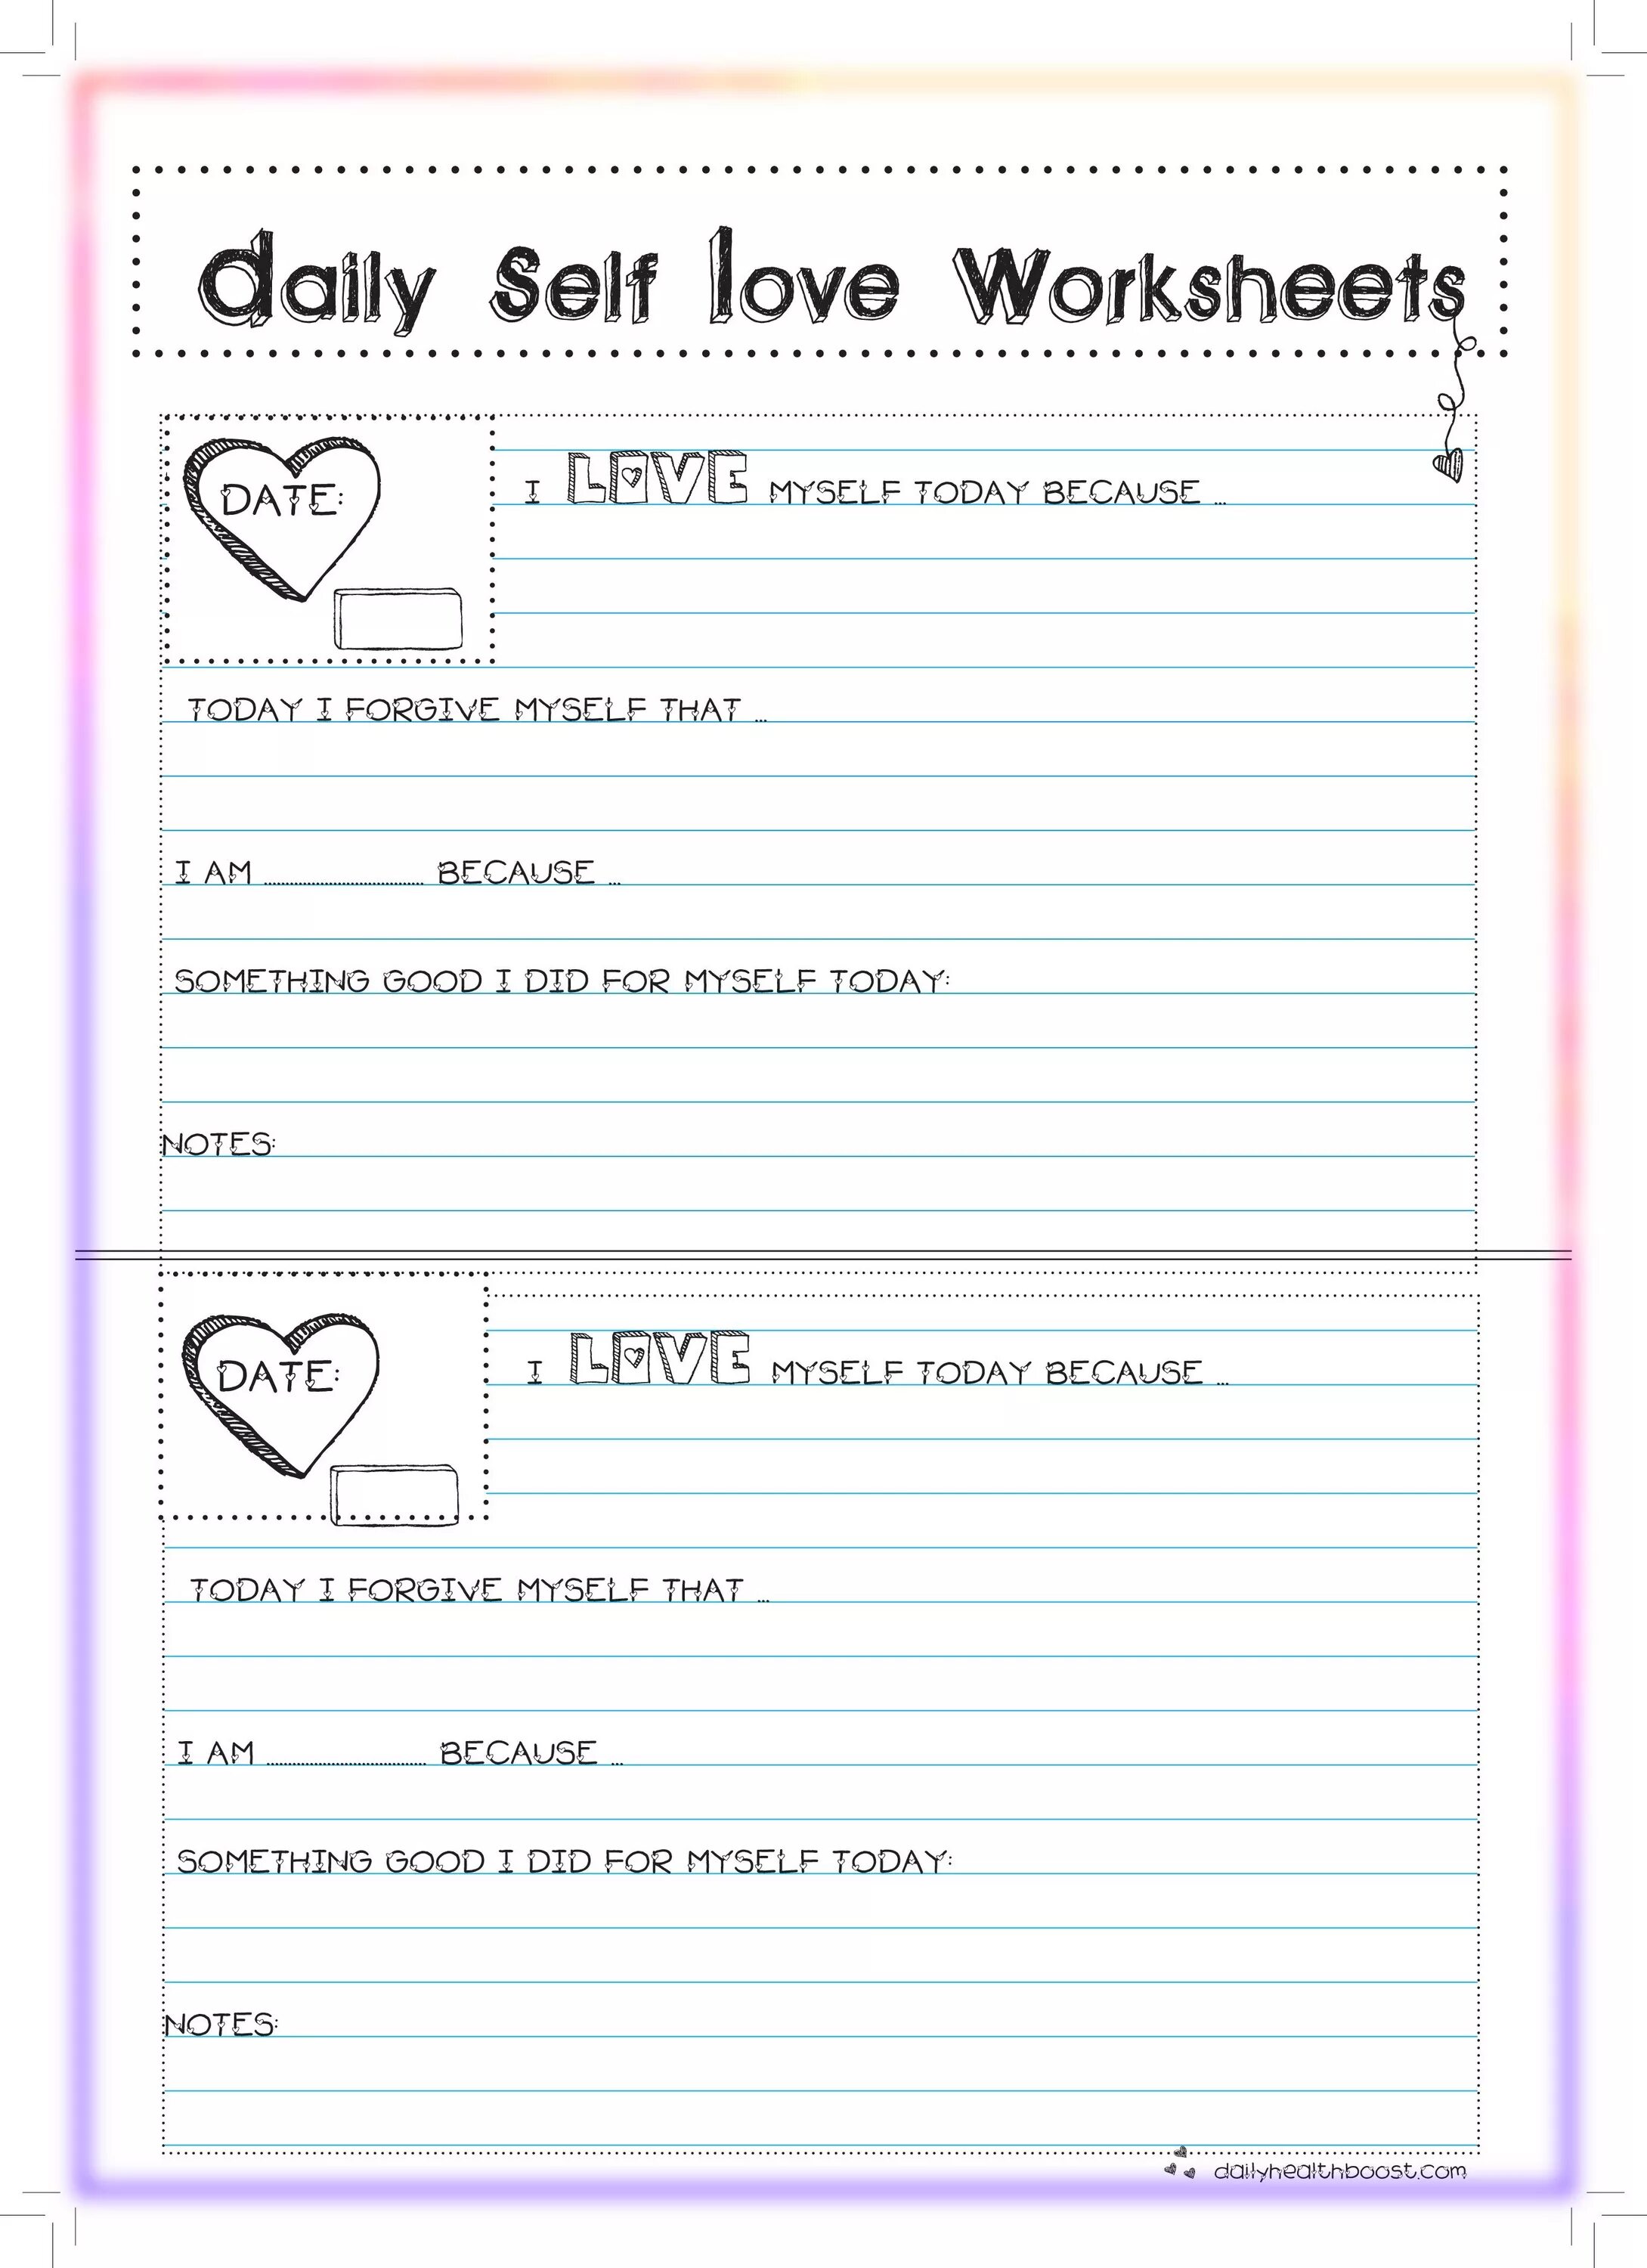 Love Worksheets. Self Worksheets. Self selves Worksheet. Self-Love Worksheet. Myself com